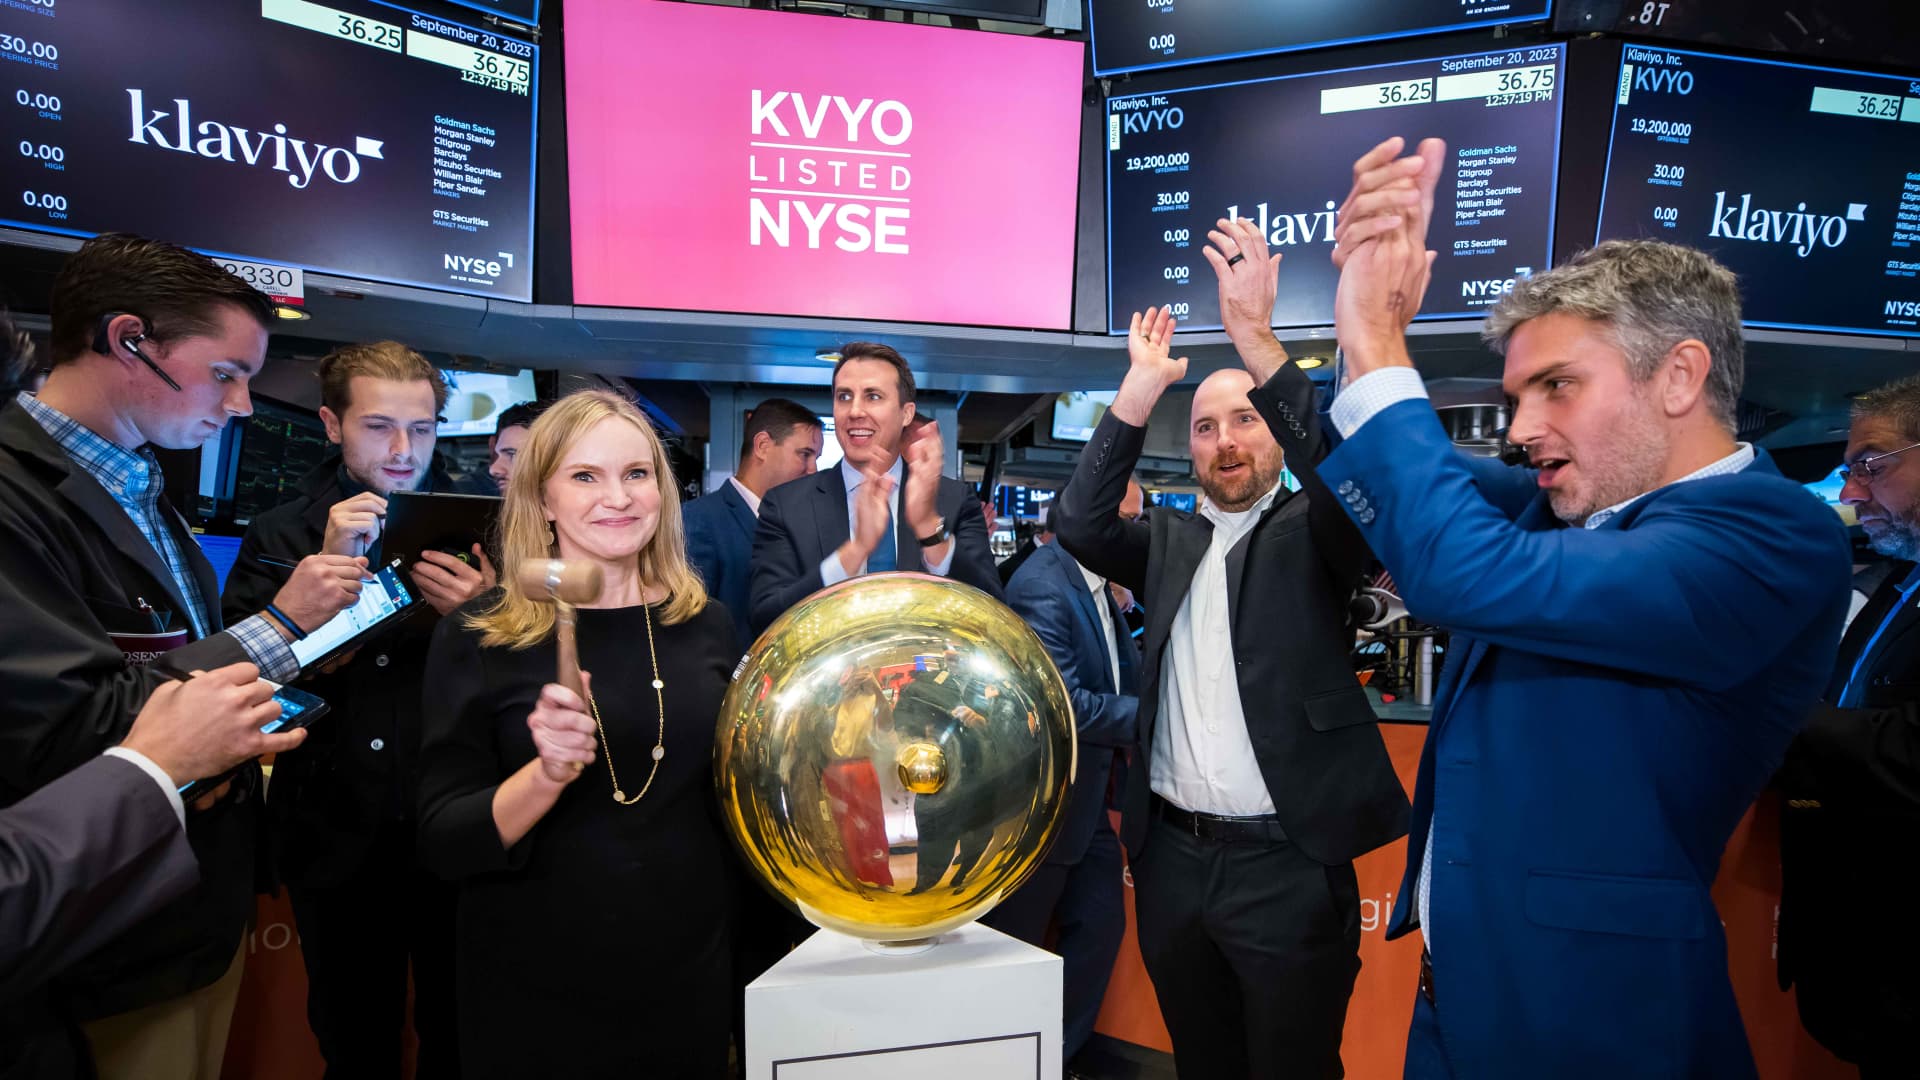 Klaviyo jumps 23% in NYSE debut after software vendor priced IPO at $30